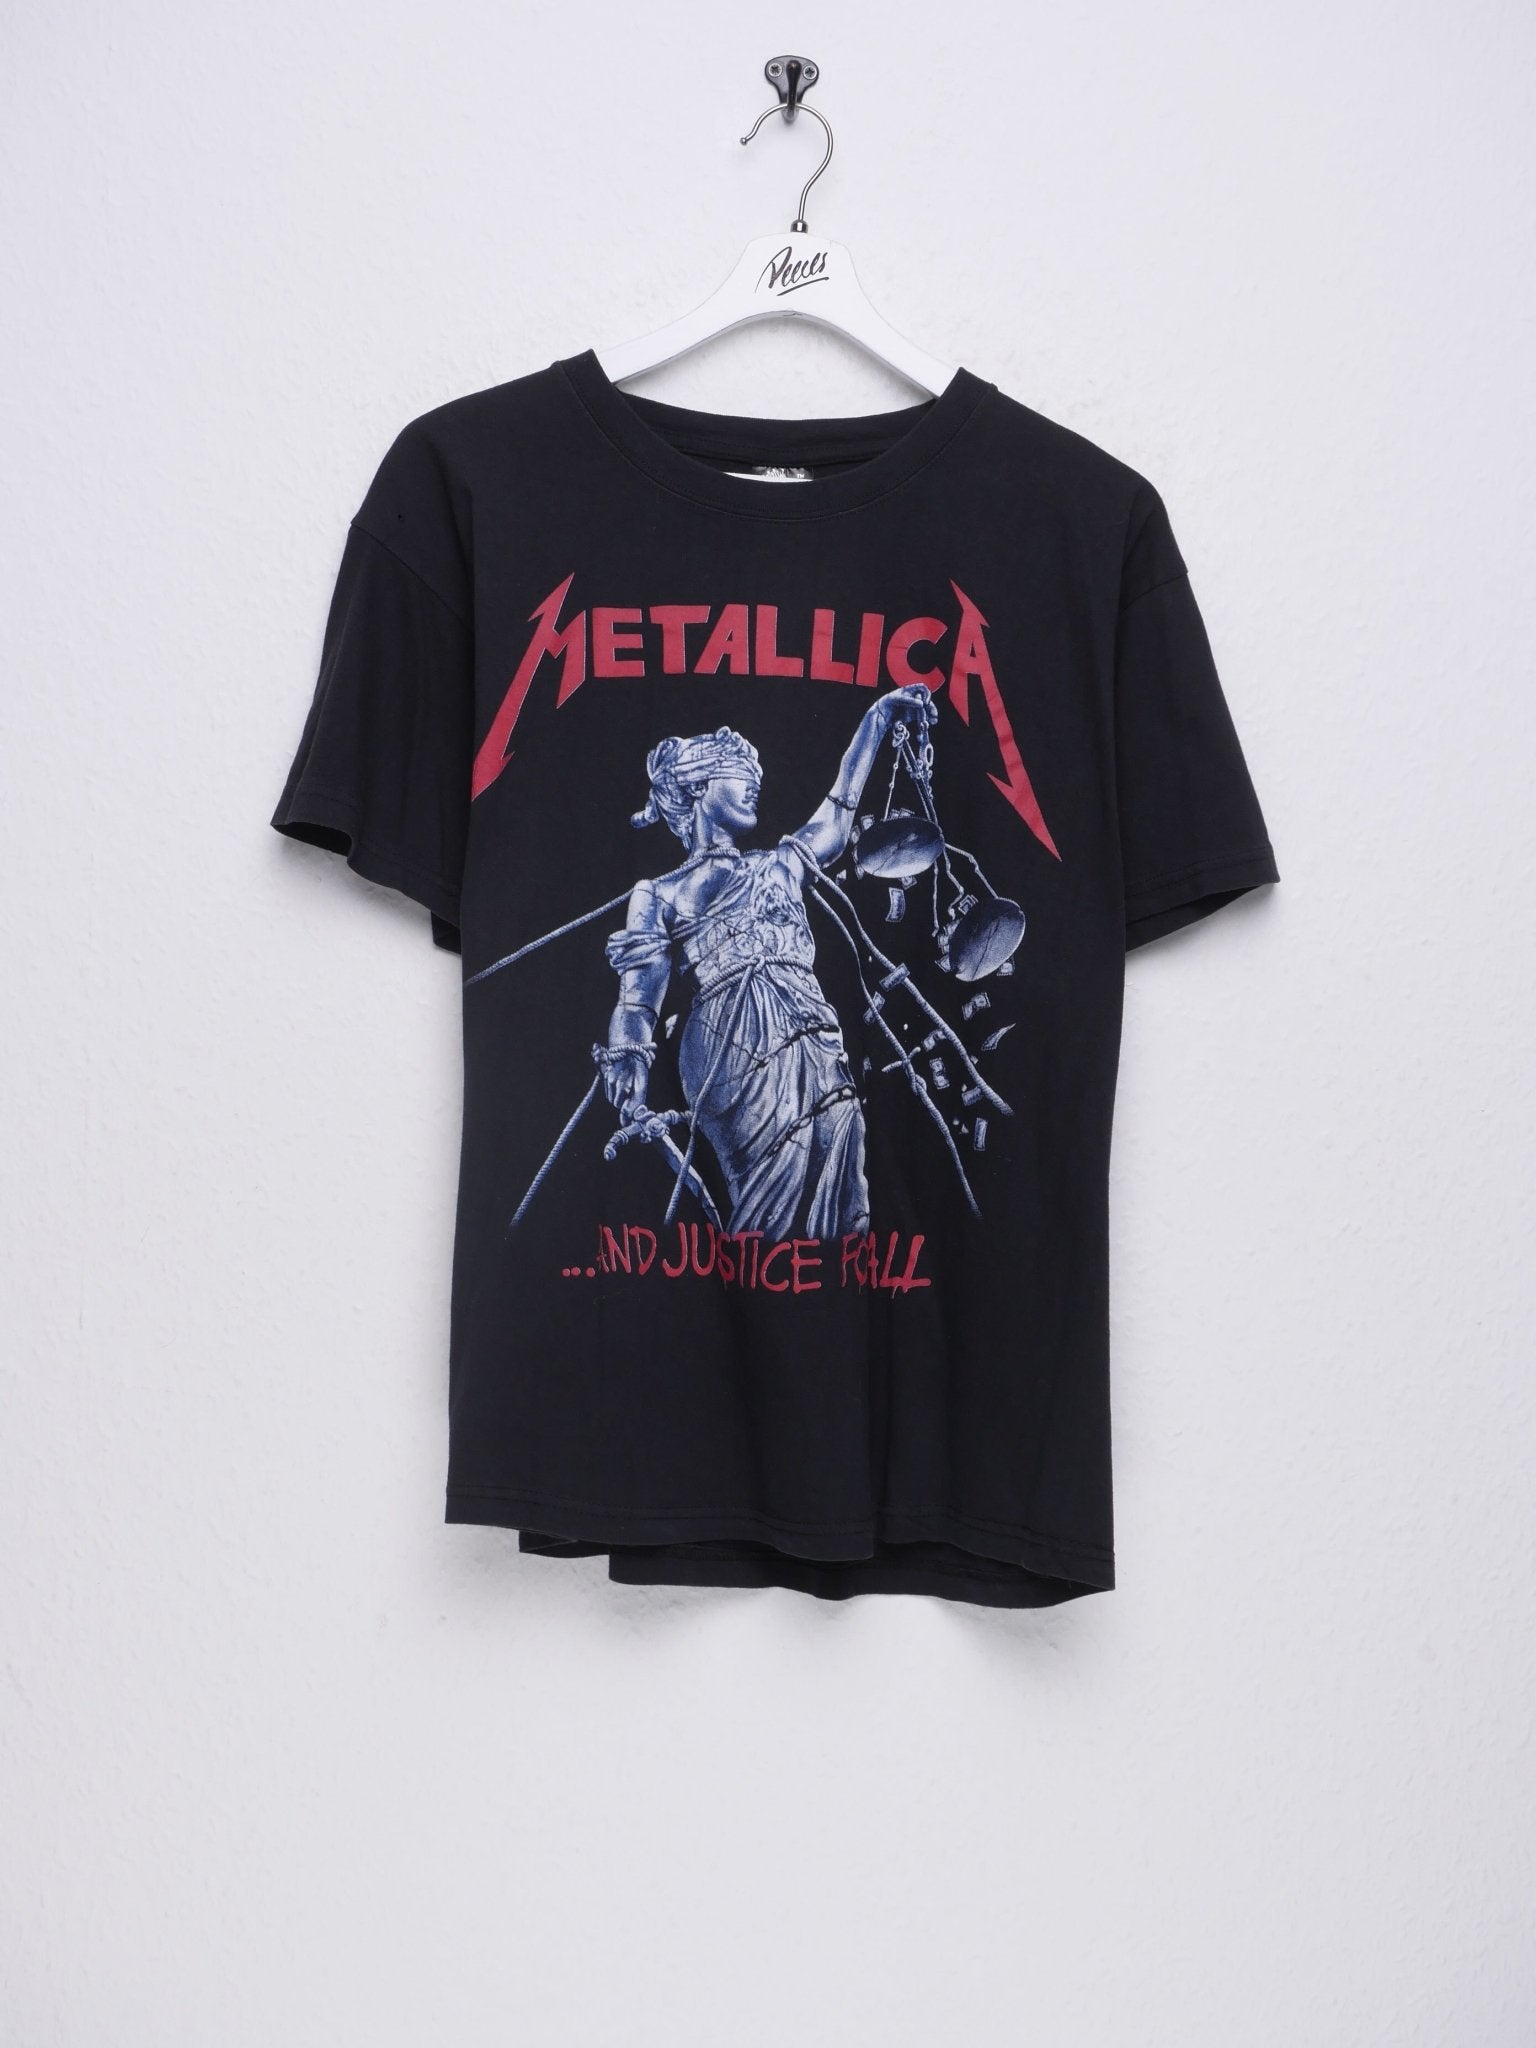 Metallica printed Graphic Vintage Shirt - Peeces